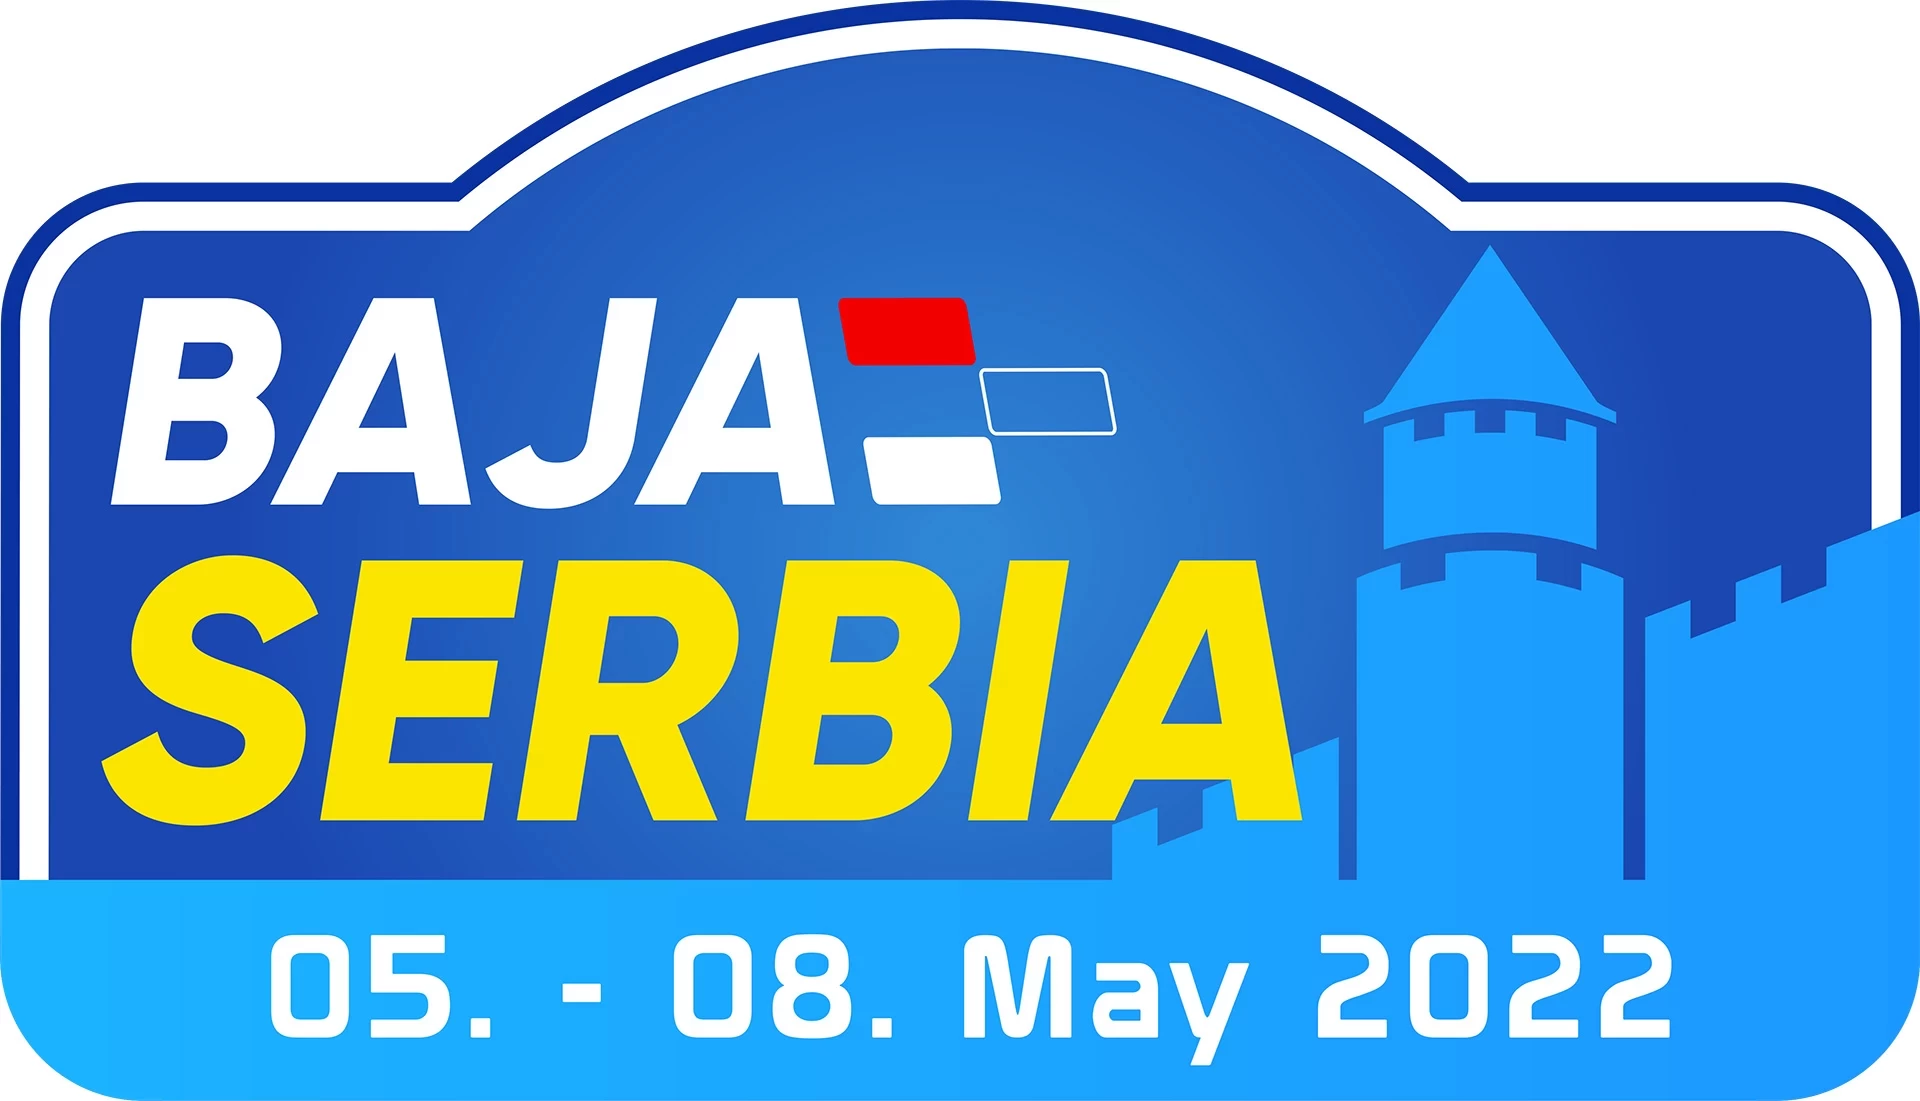 BAJA SERBIA 2022 - ANULAT